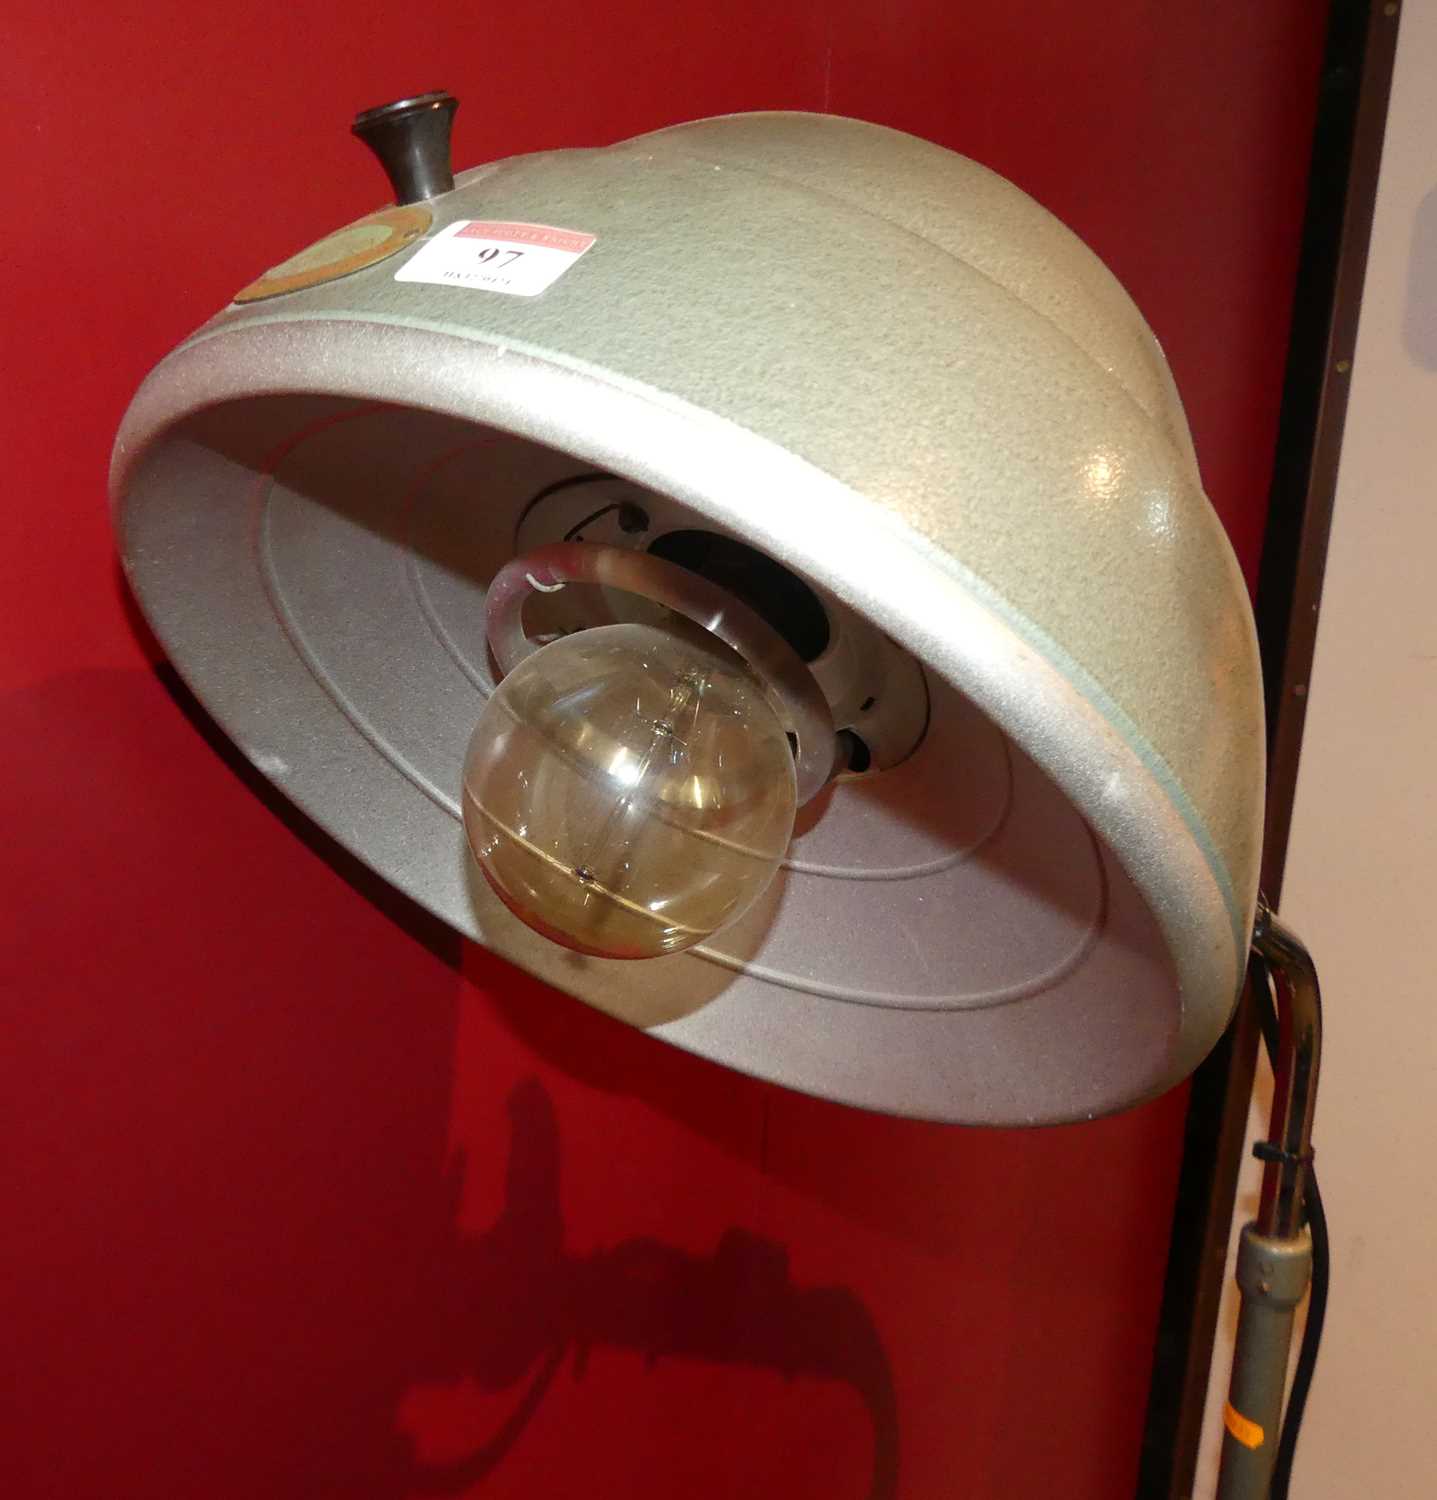 A Hanovia Lamps of Slough, England, the prescription model No. 7 adjustable industrial light - Image 2 of 2